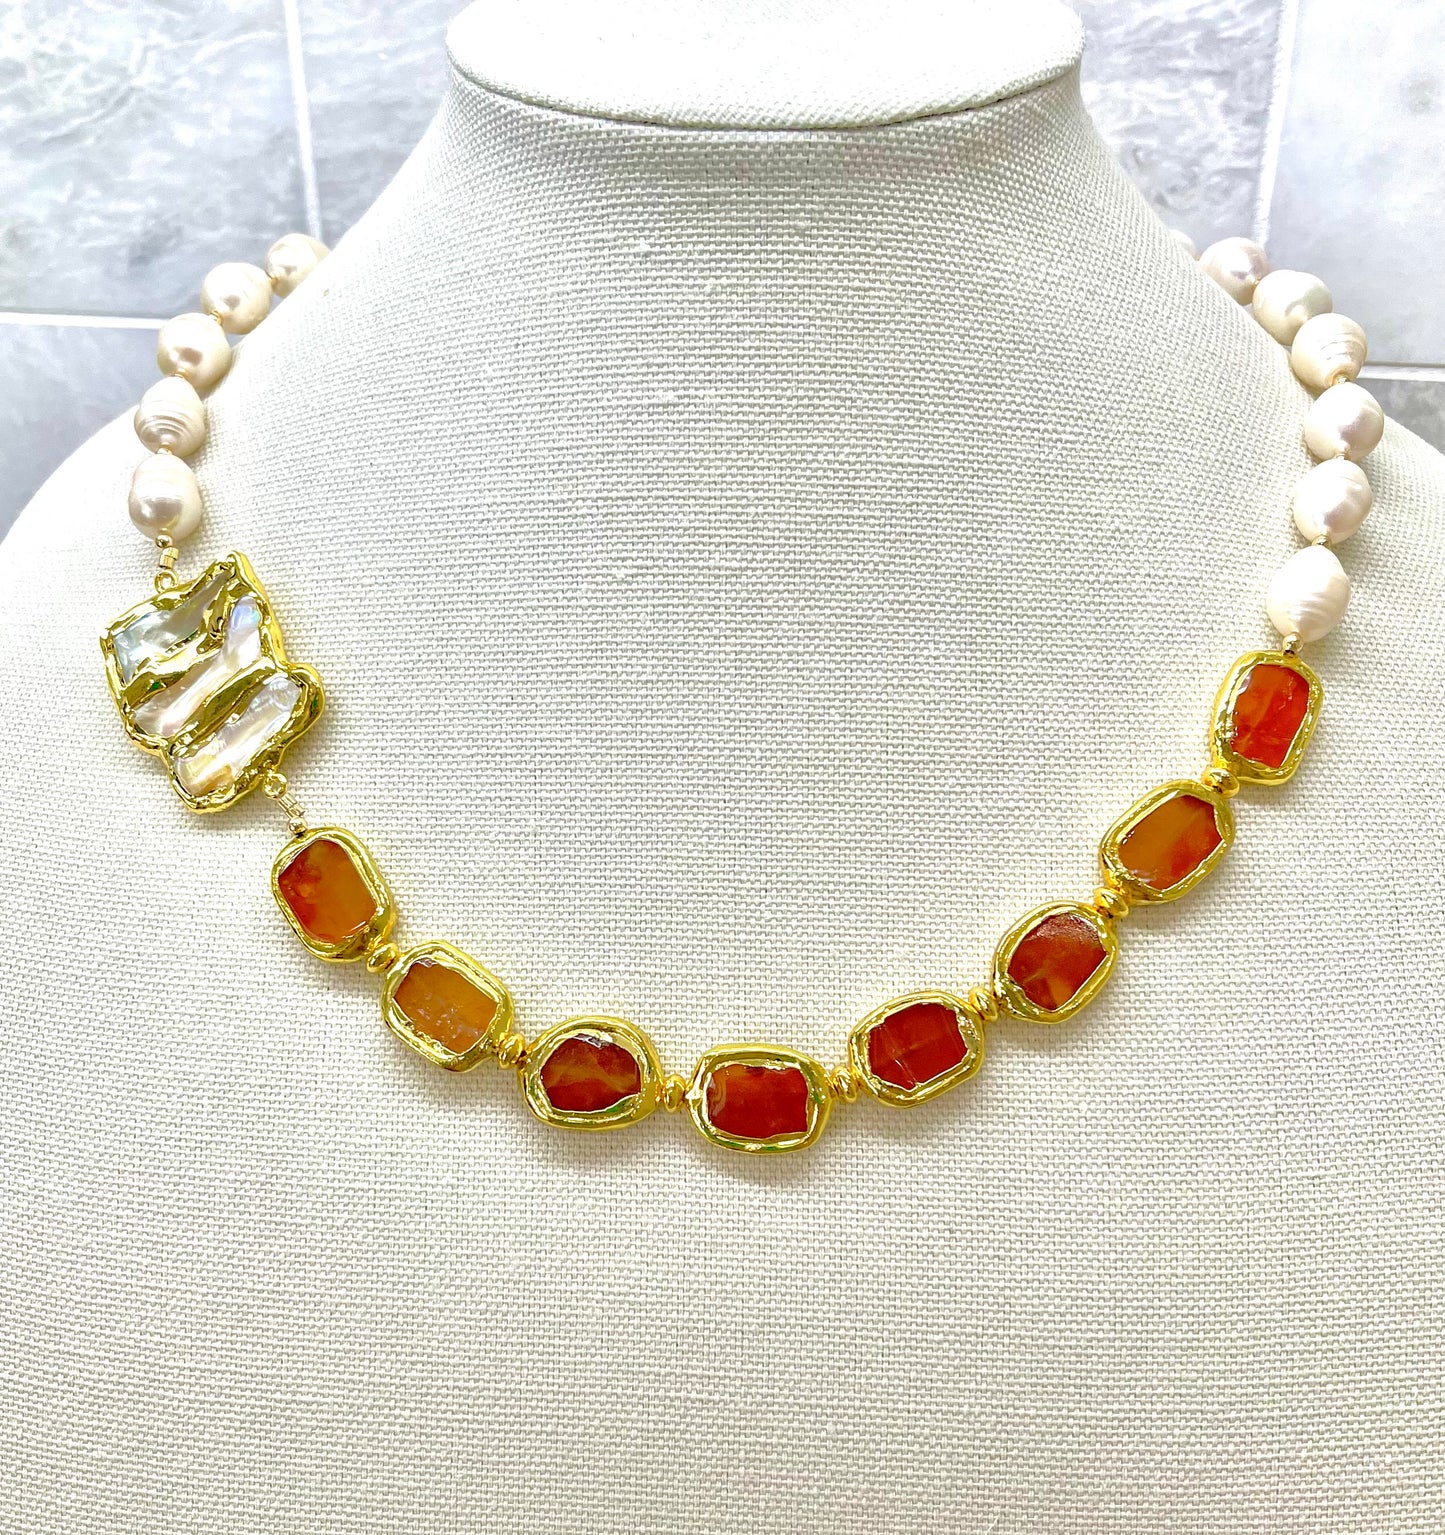 Stylish Orangle Carnelian and Freshwater Pearls Gemstone Statement Necklace 23”